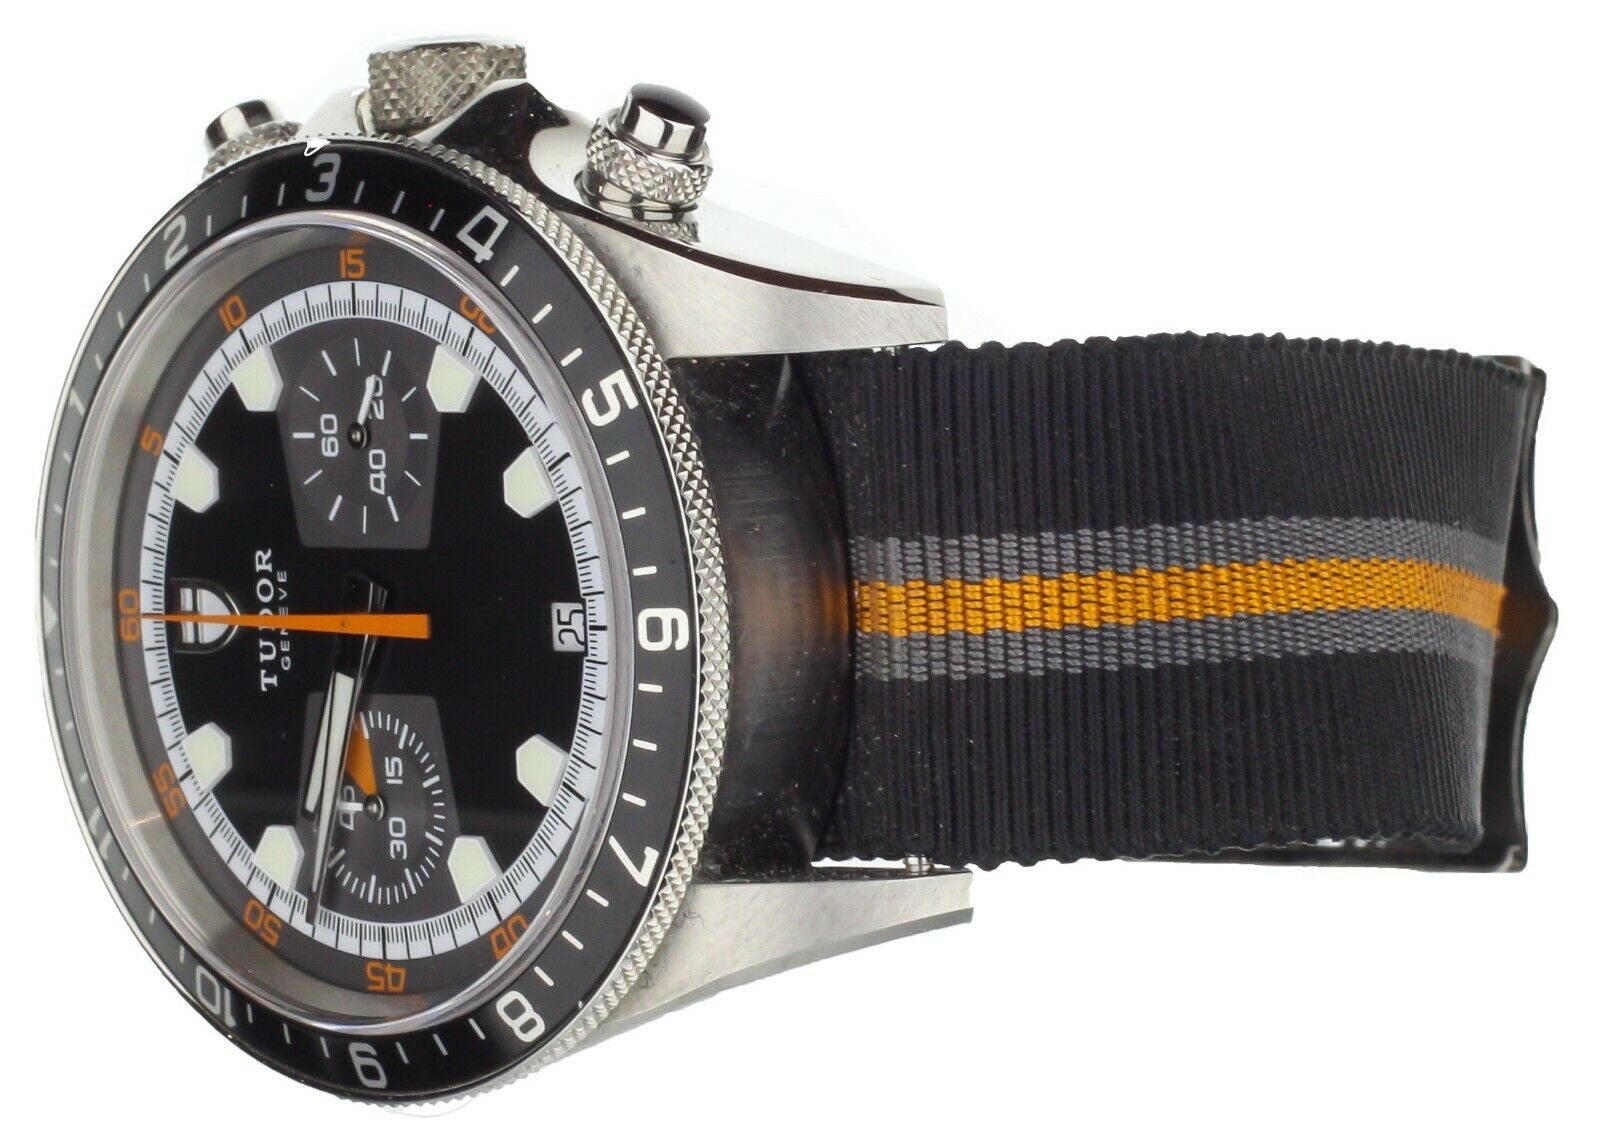 Image of Tudor Heritage Chronograph Black/ Orange on Nato m70330n-0004